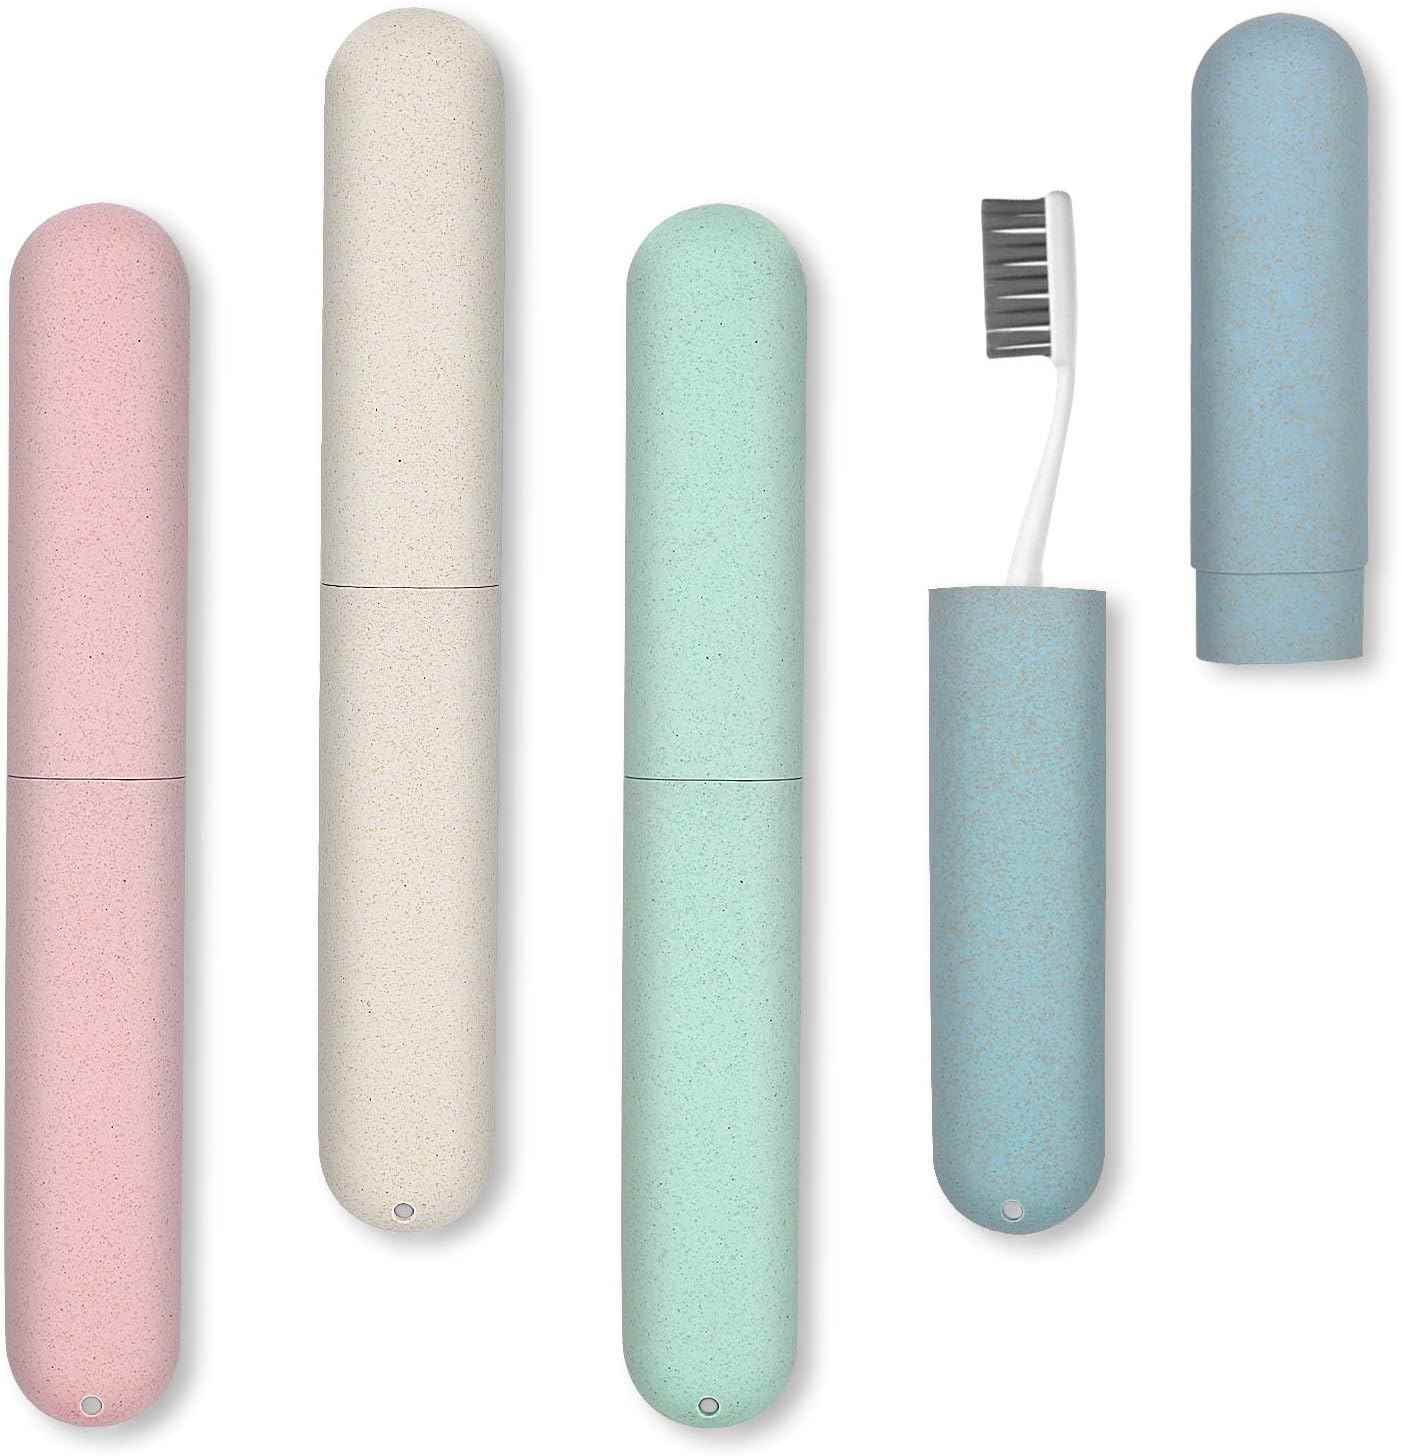 NEXCURIO Portable Travel Toothbrush Case